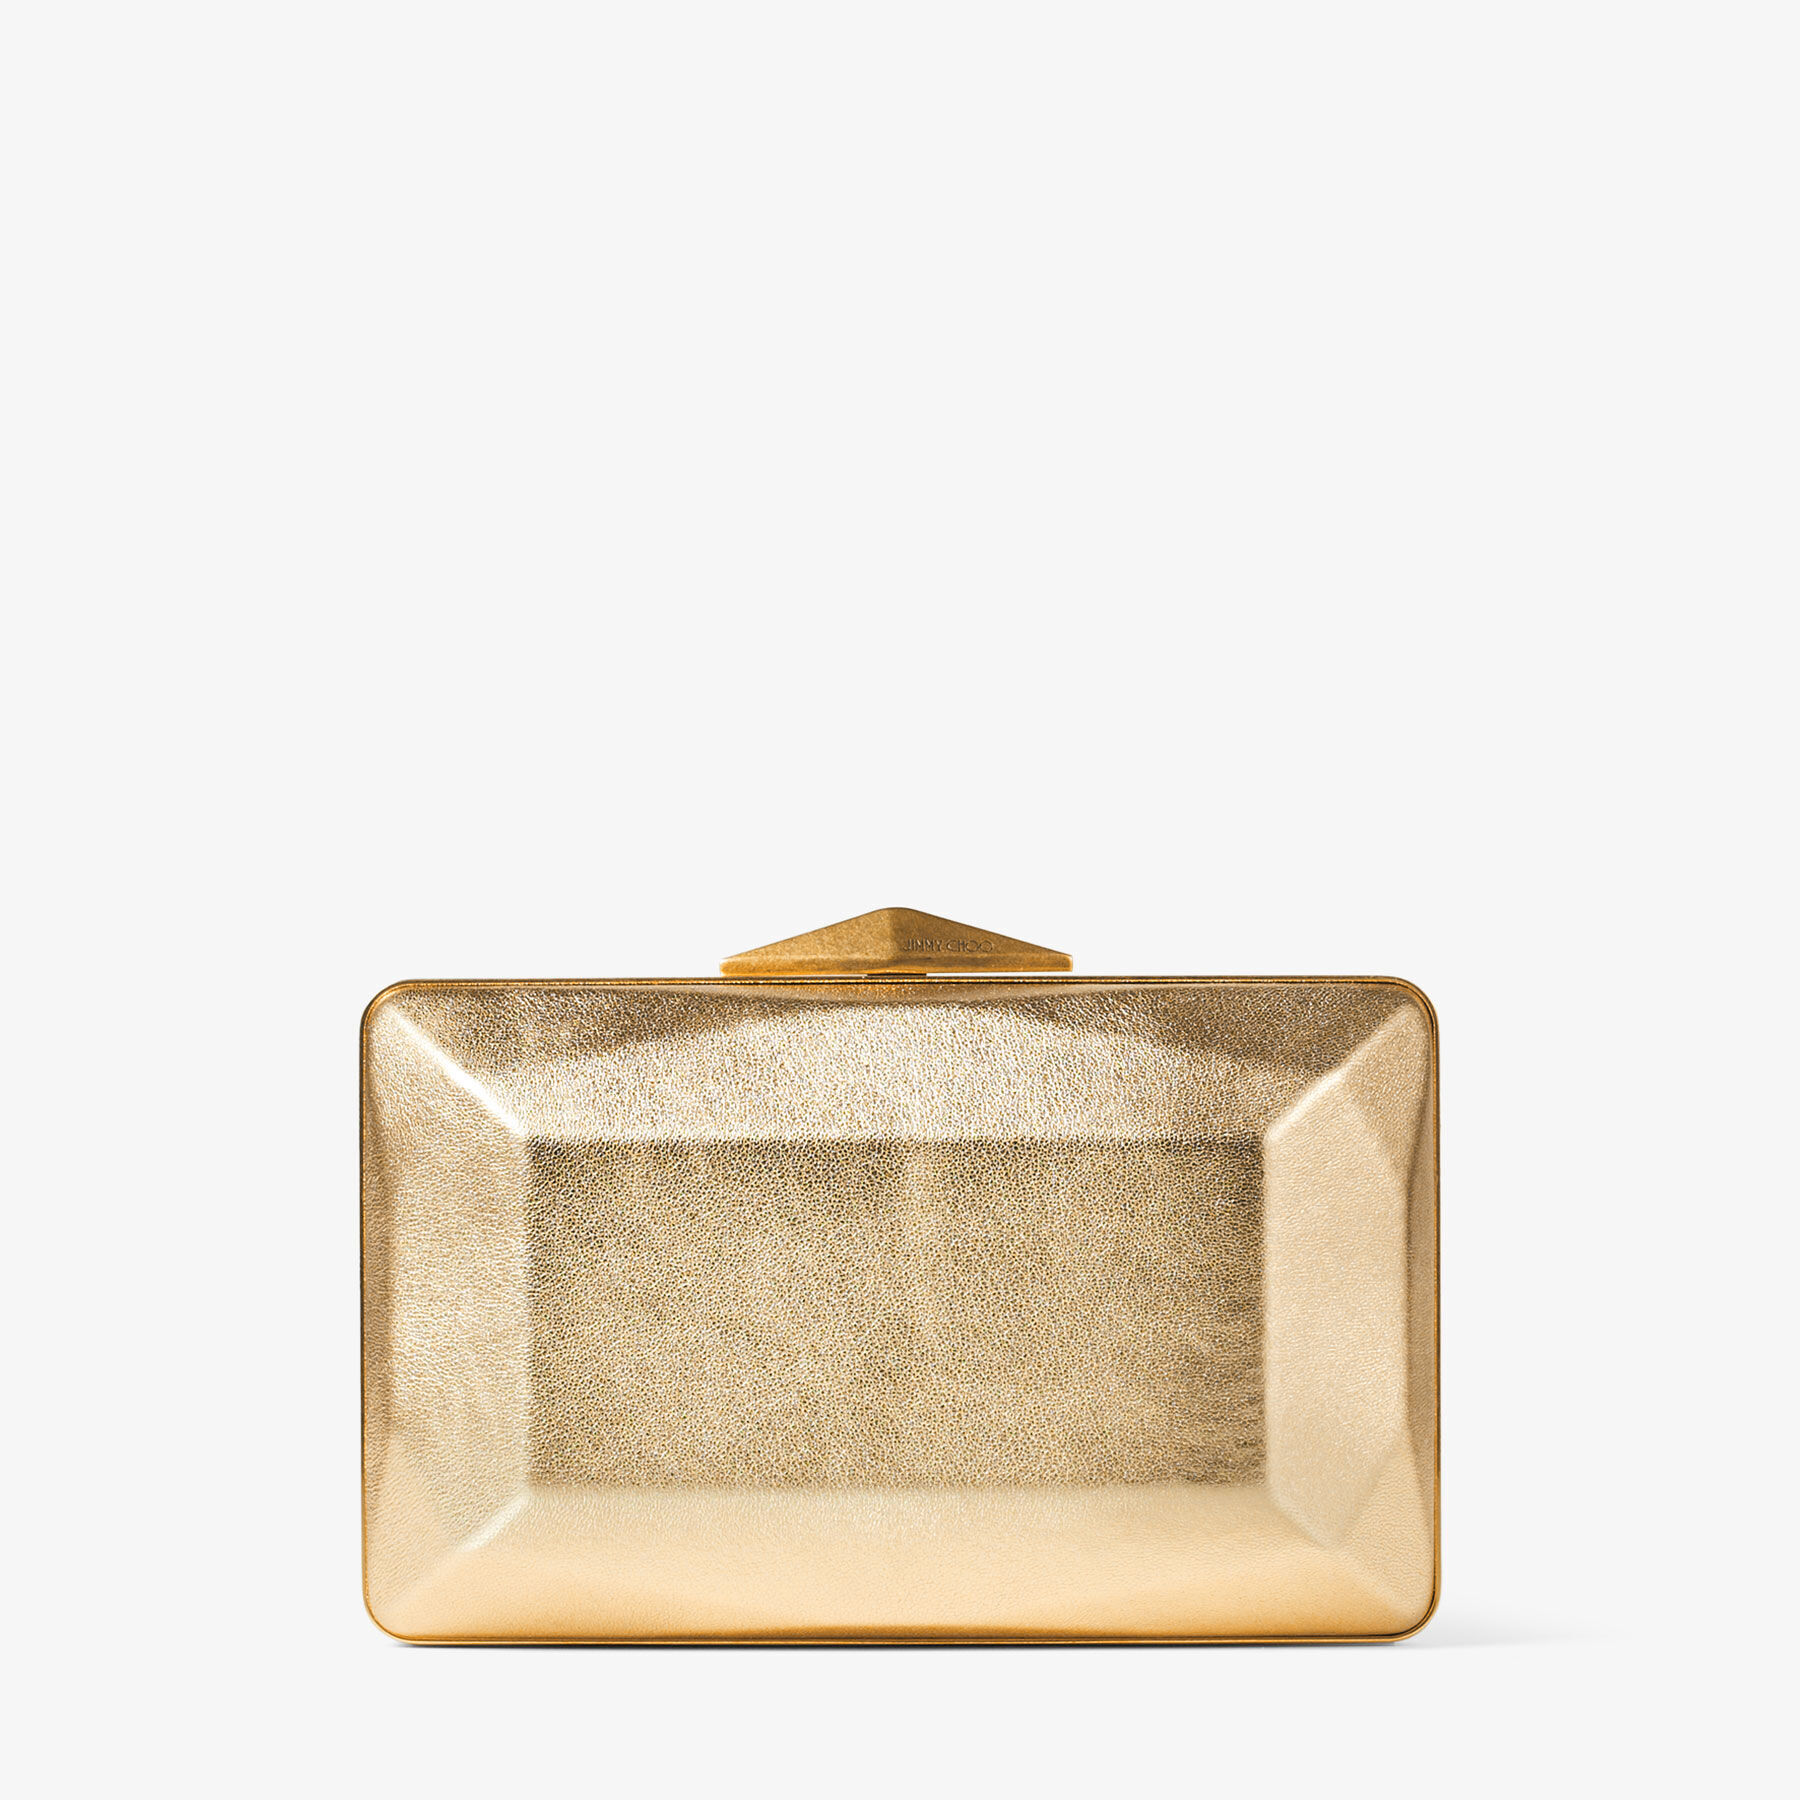 DIAMOND BOX CLUTCH | Gold Metallic Nappa Leather Box Clutch Bag